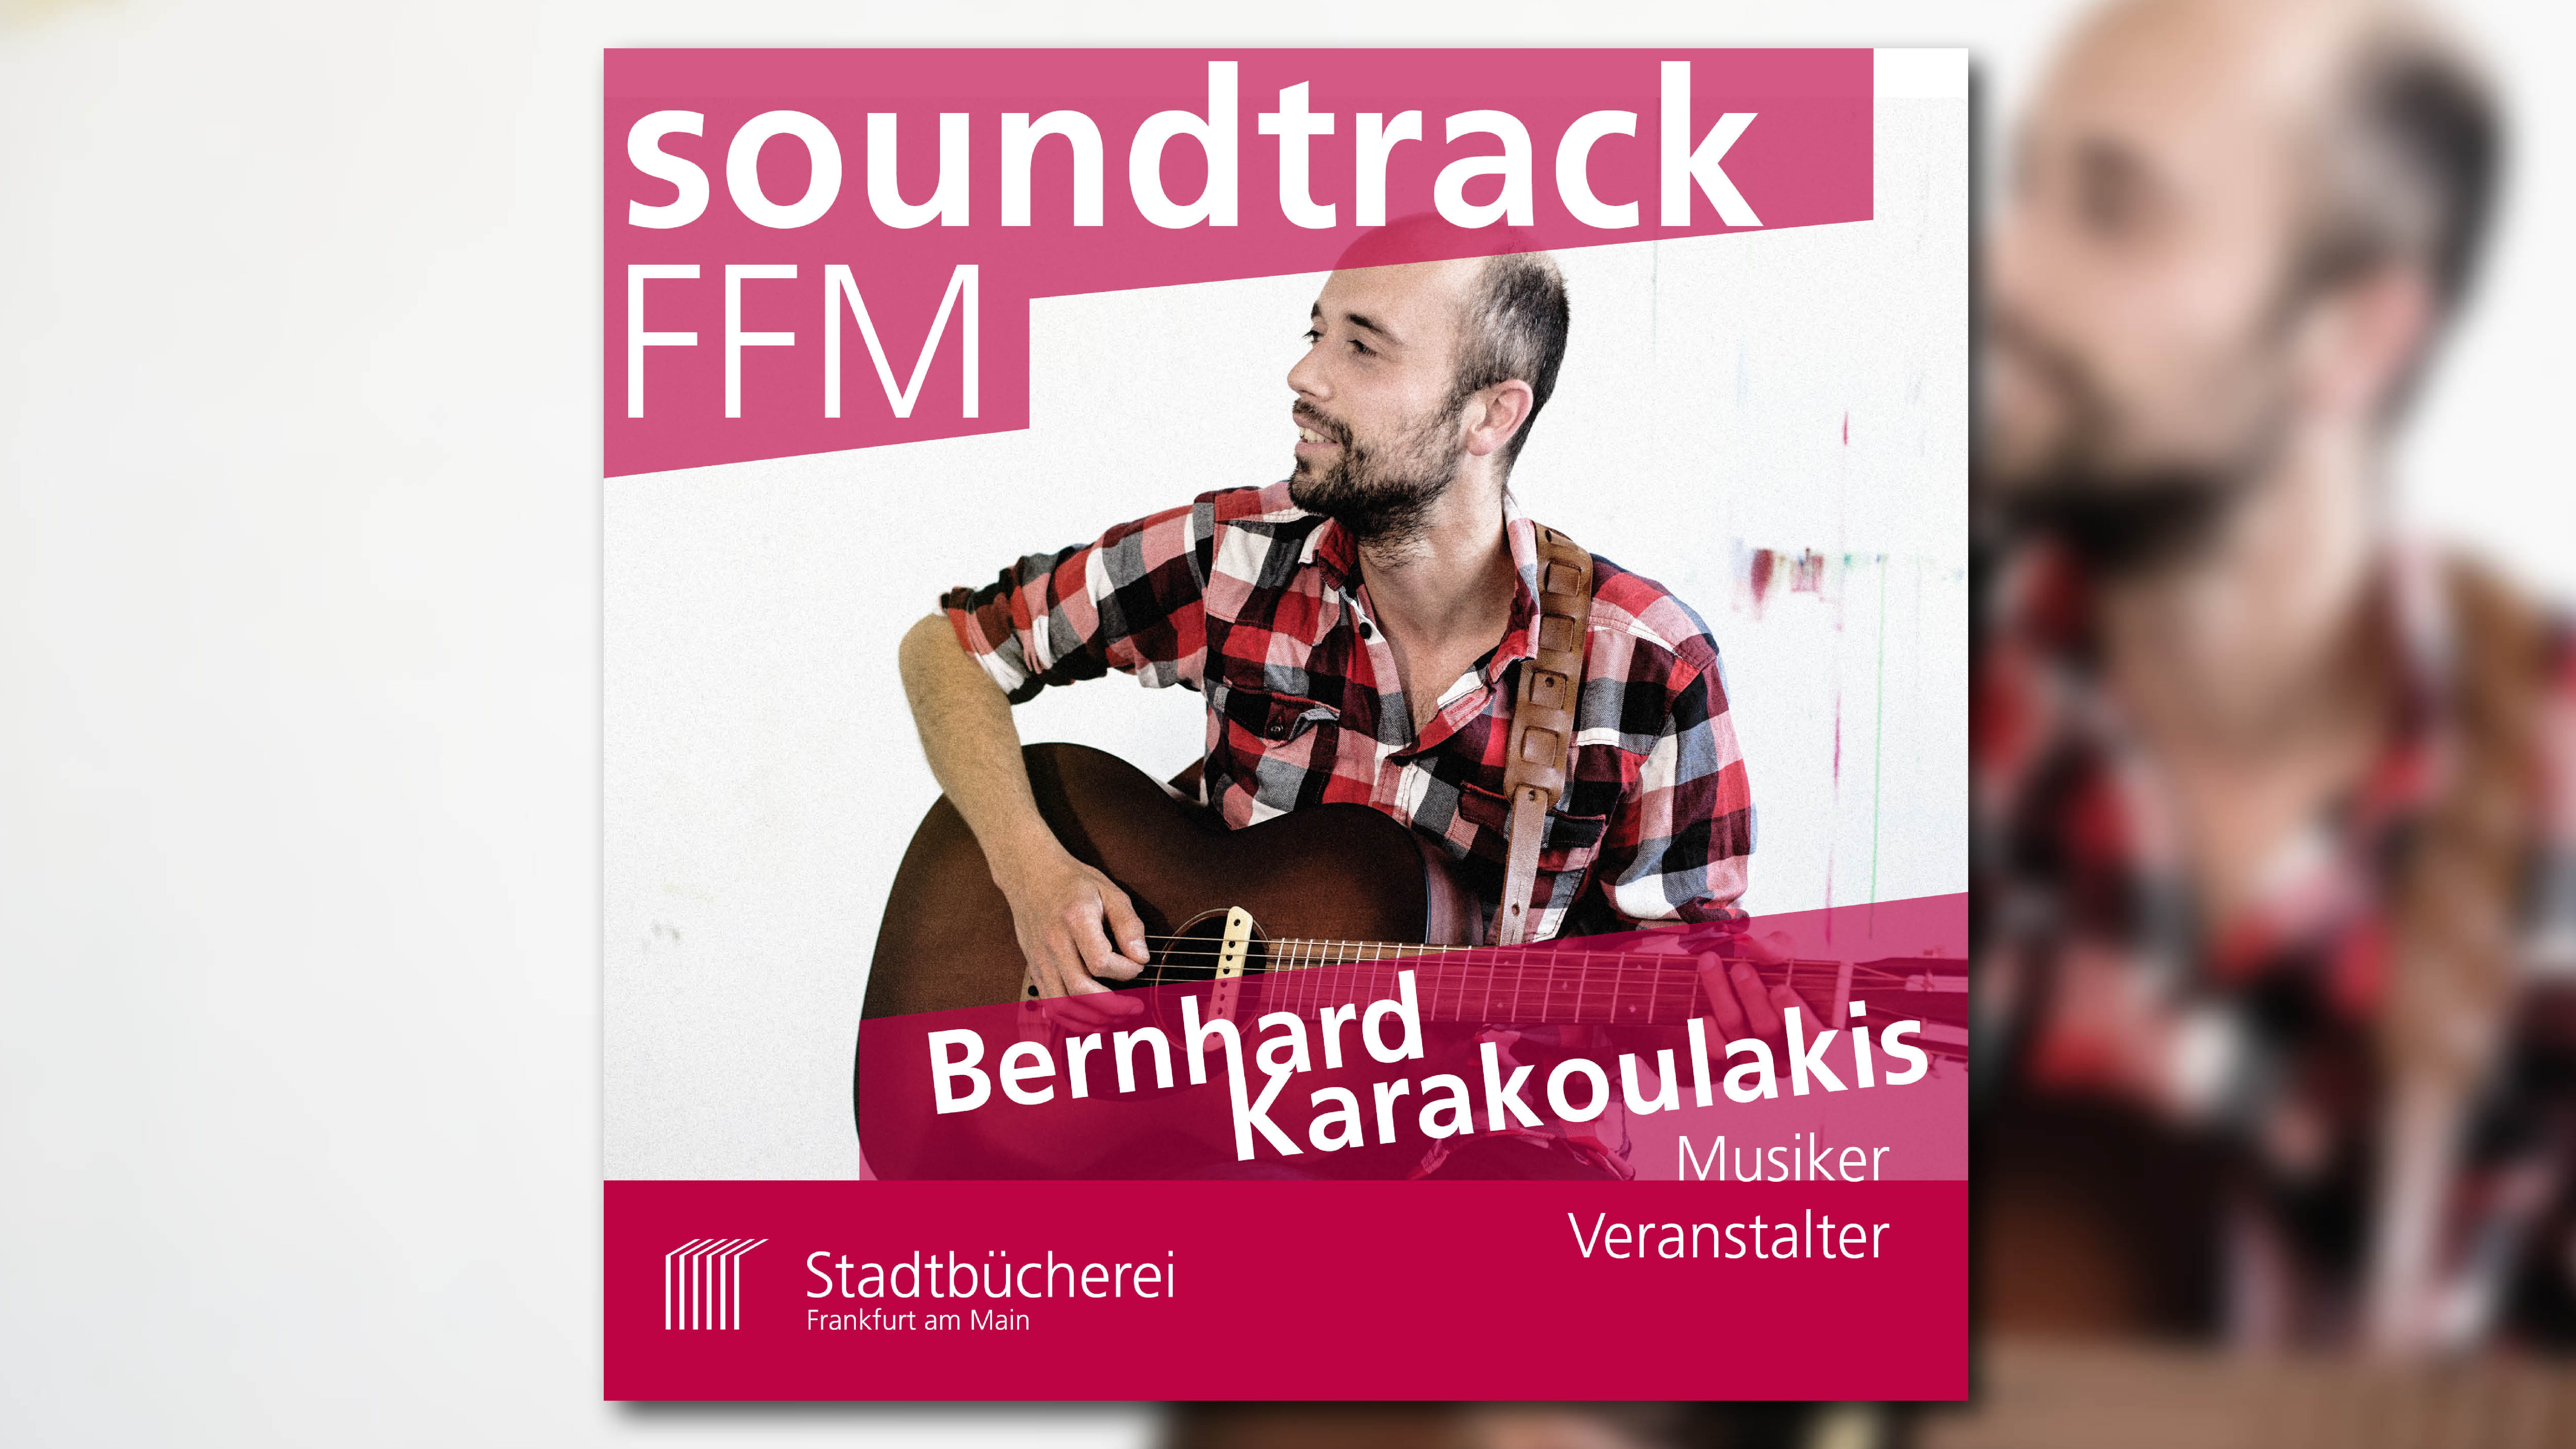 Bernhard Karakoulakis (BooHoo), Veranstalter und Musiker